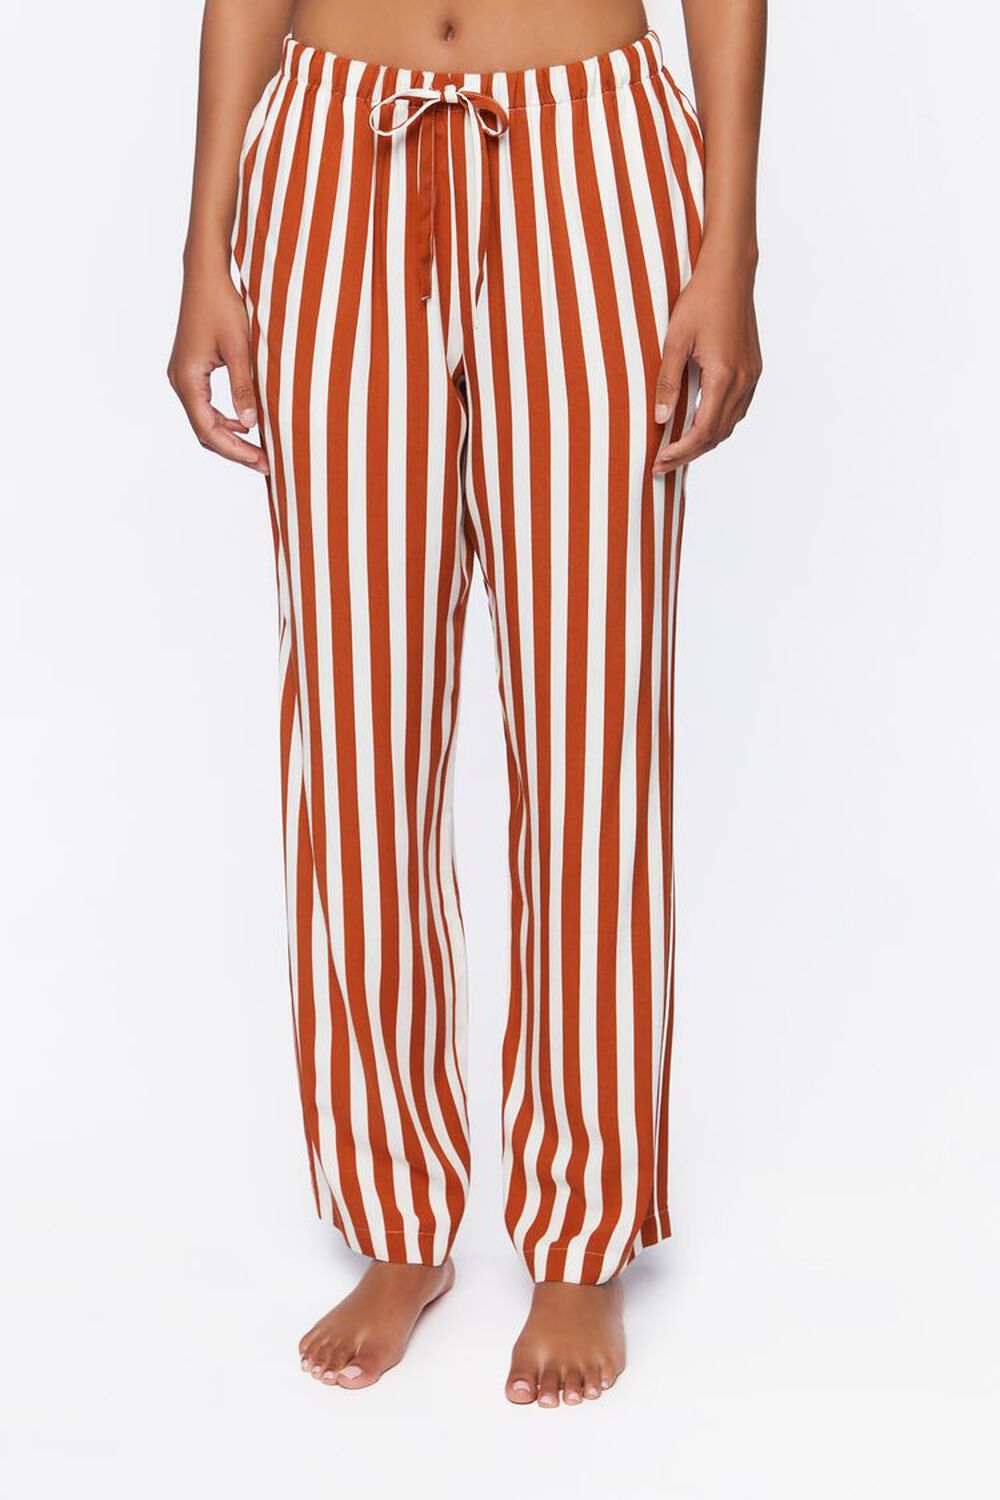 COFFEE/WHITE Striped Pajama Pants, image 2